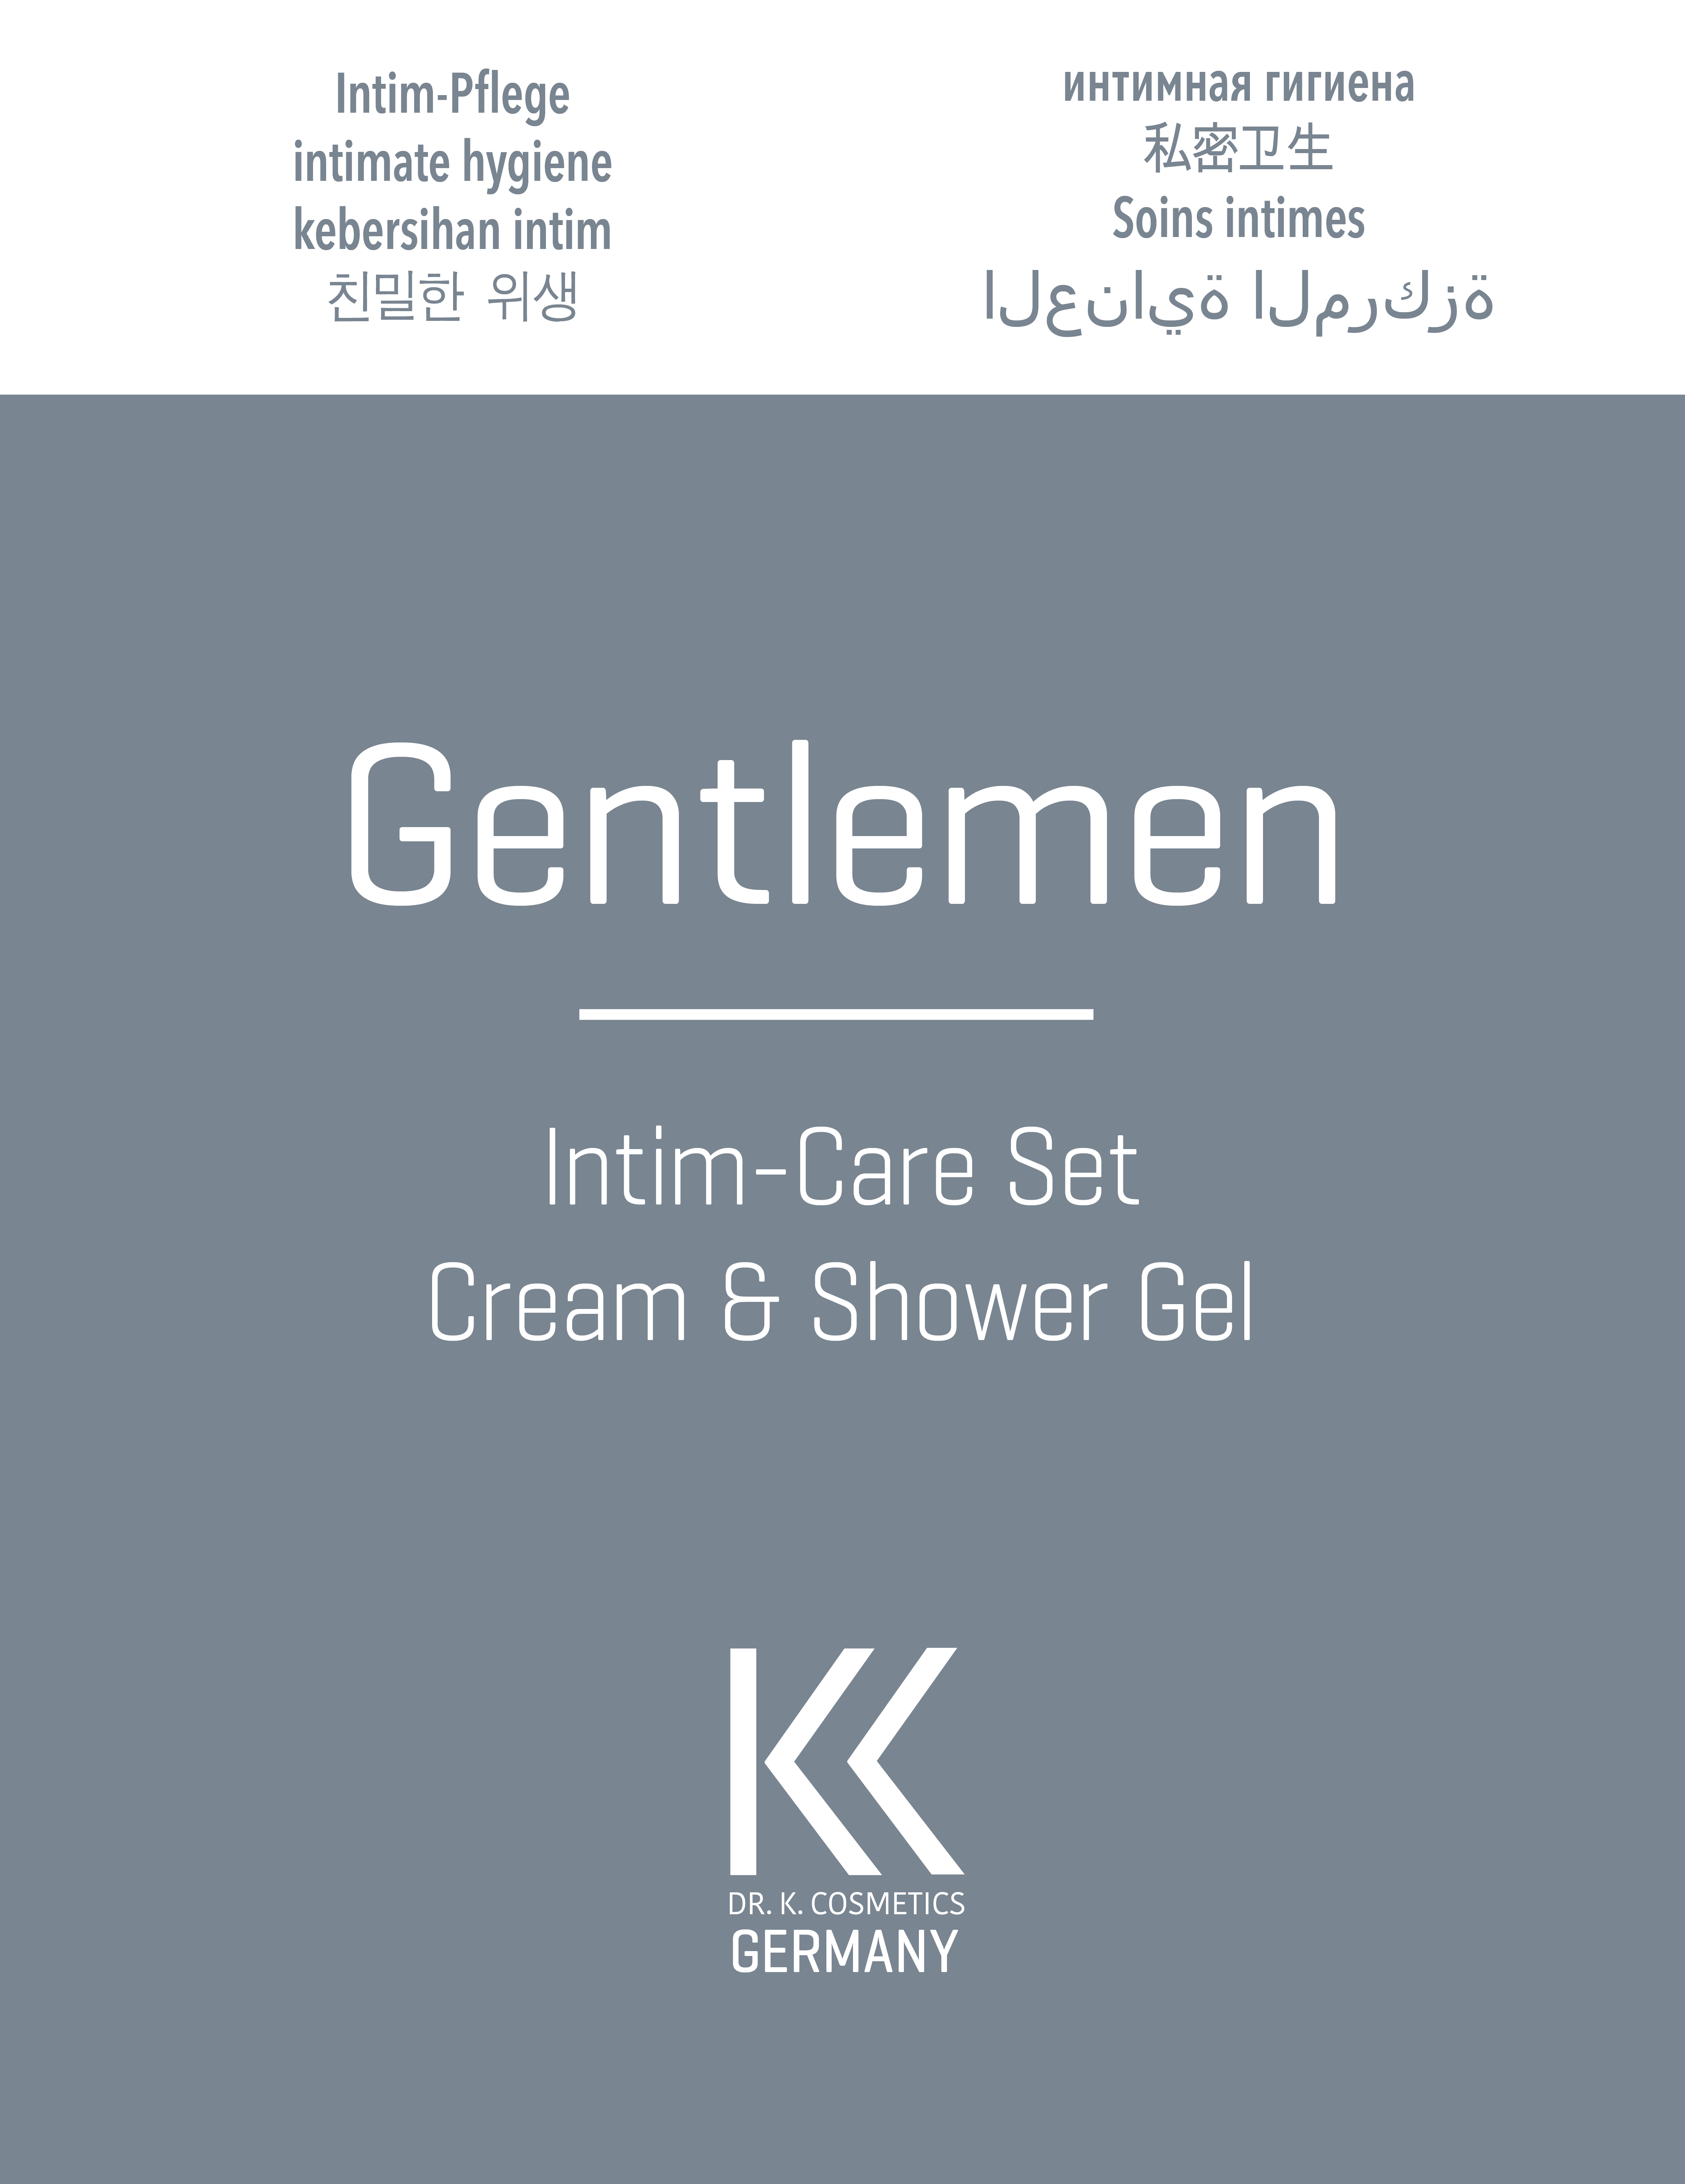 Gentlemen Intim-Care Set - Cream & Shower Gel